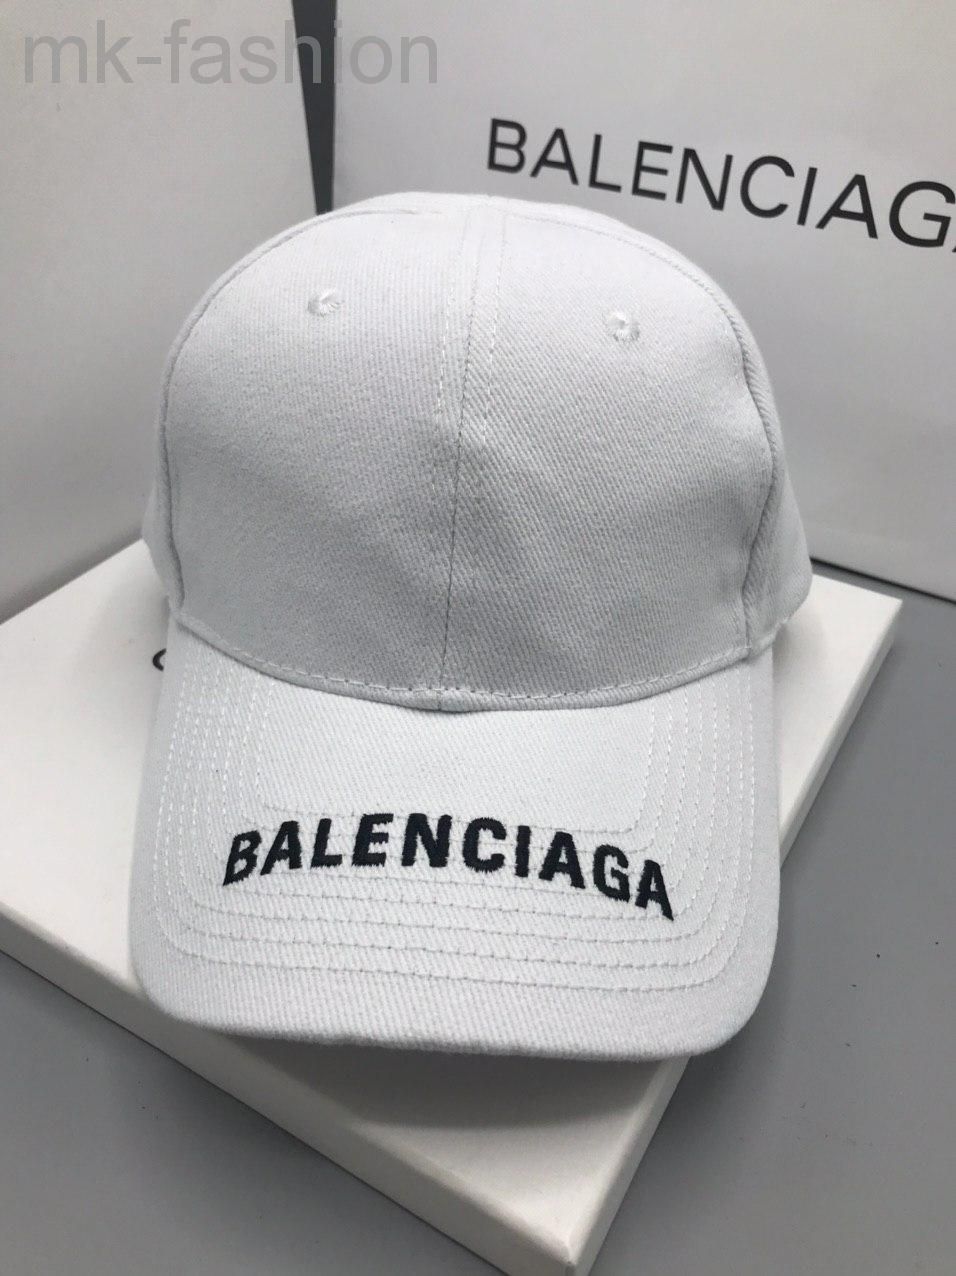 Balenciaga cap (Кристобаль Баленсиага)